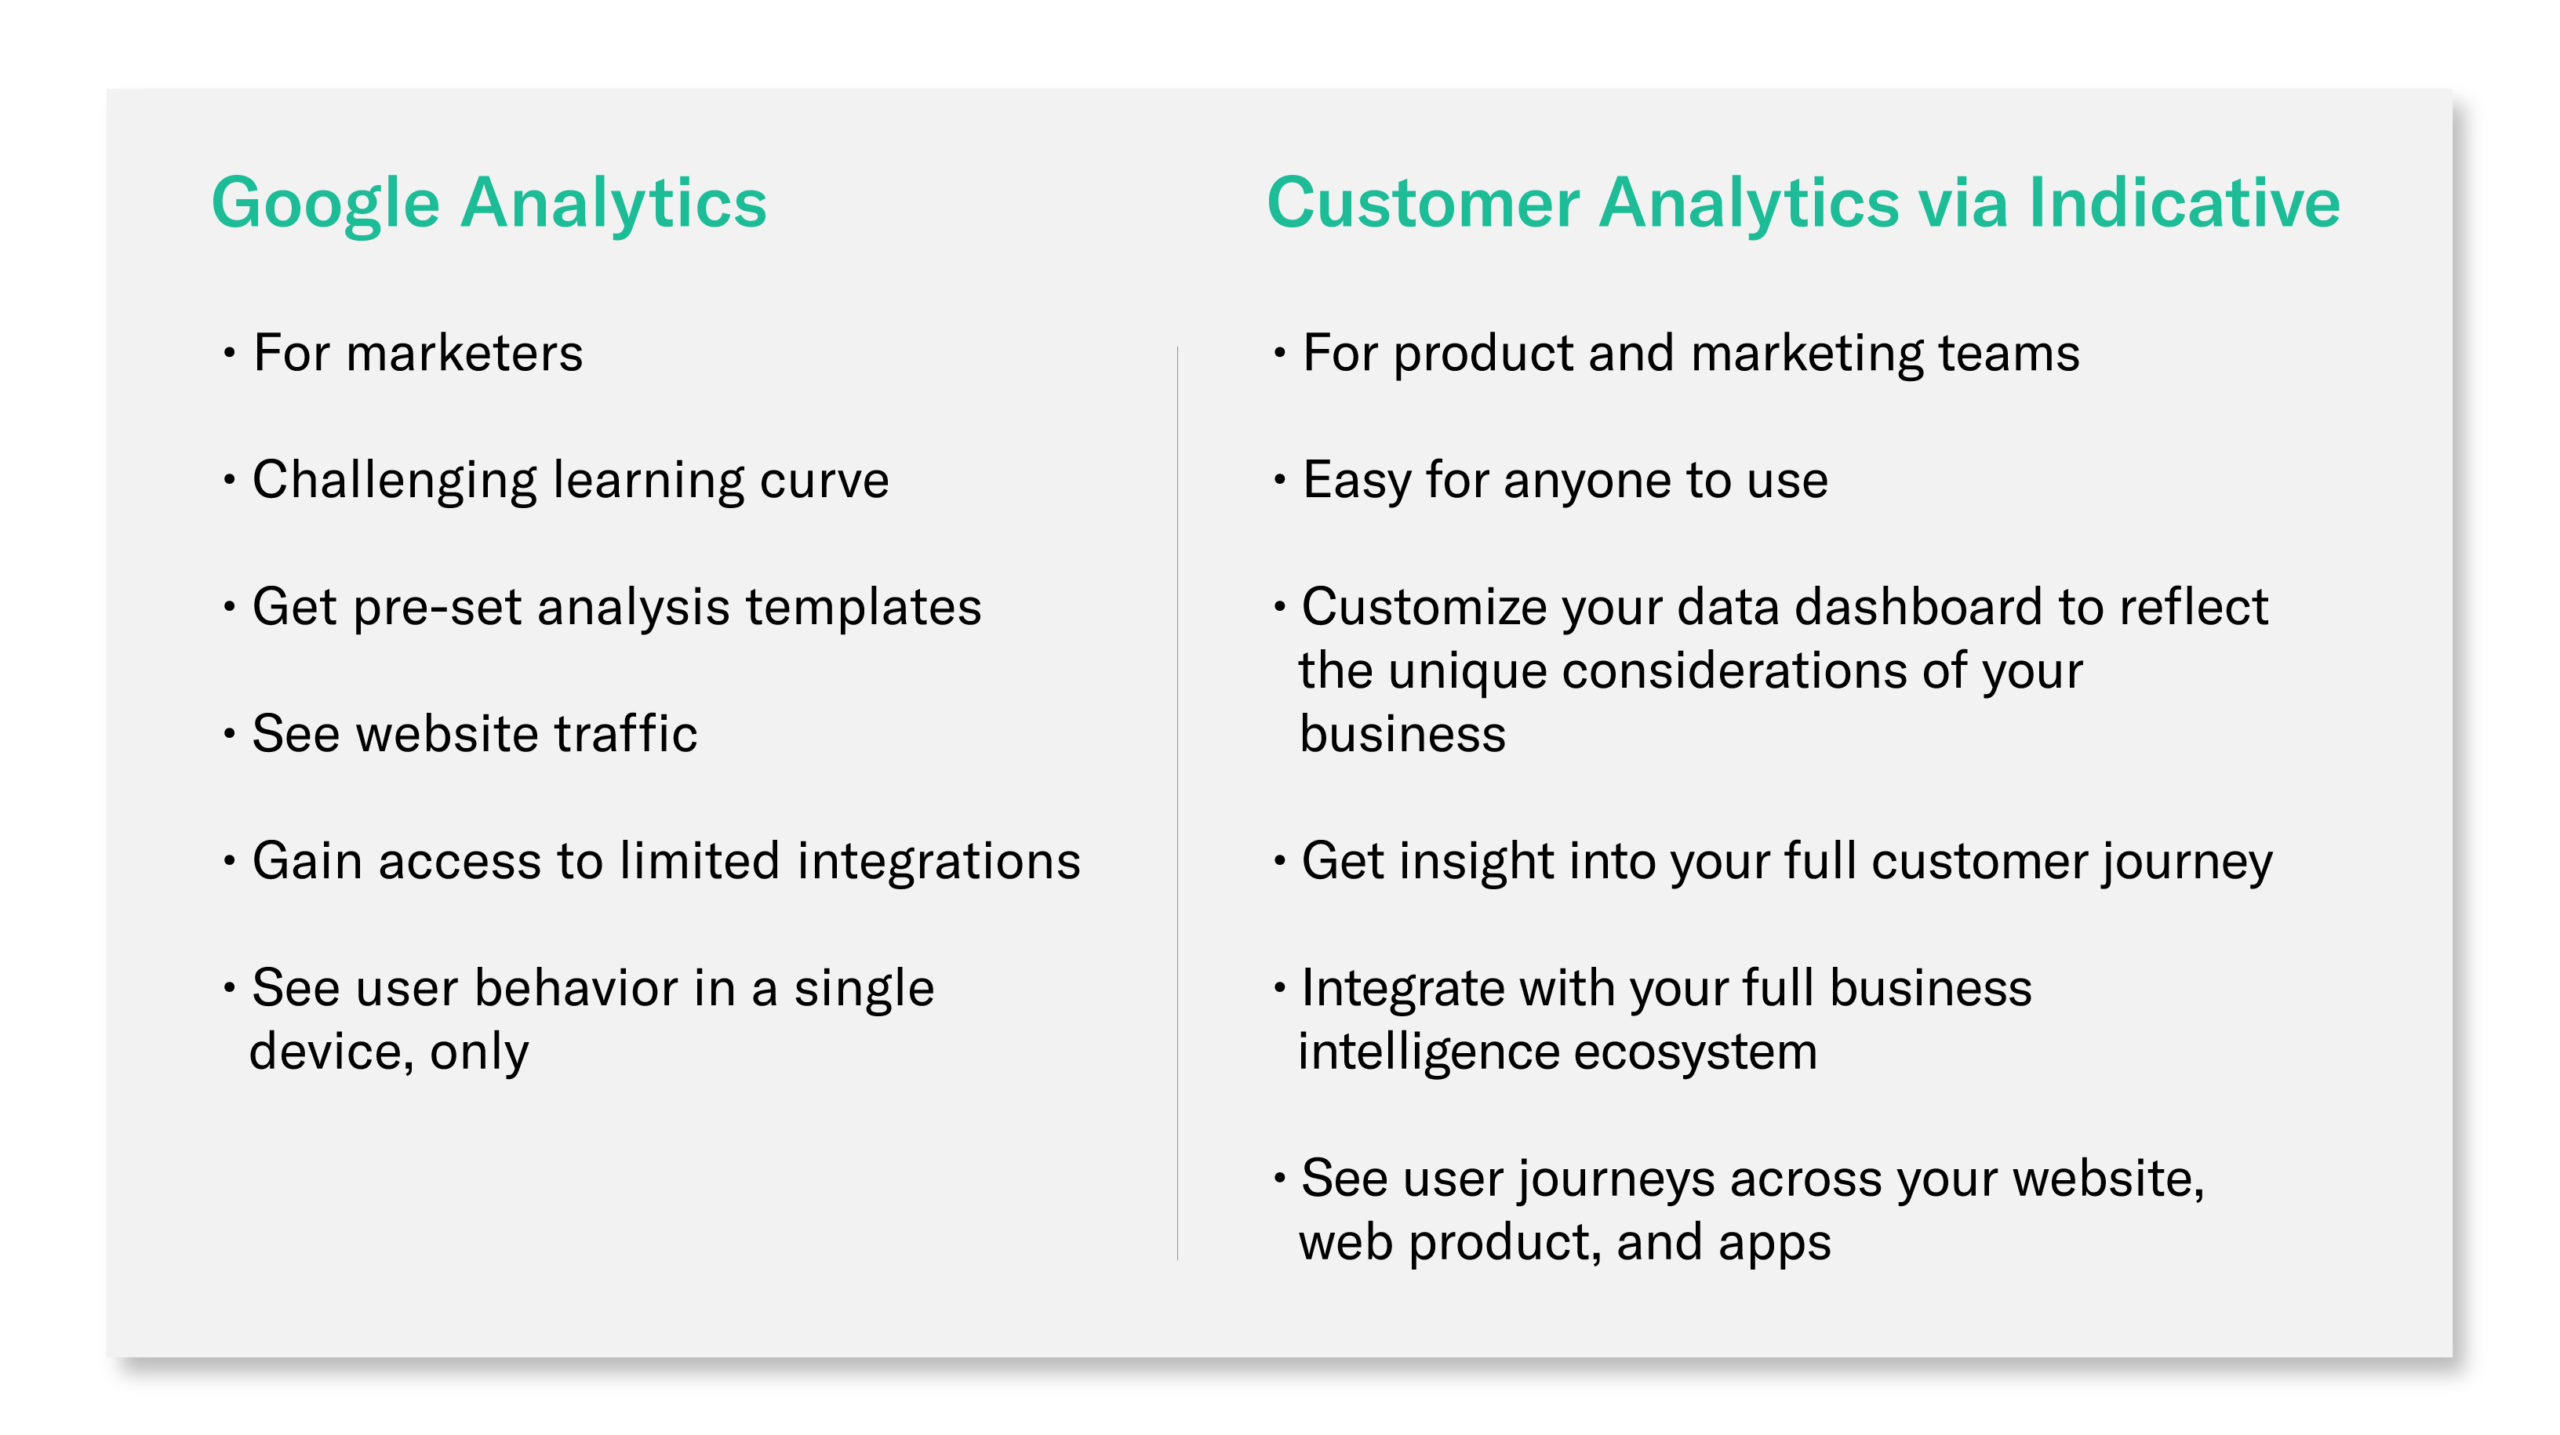 Summary chart of the difference between Google Analytics vs Customer Analytics